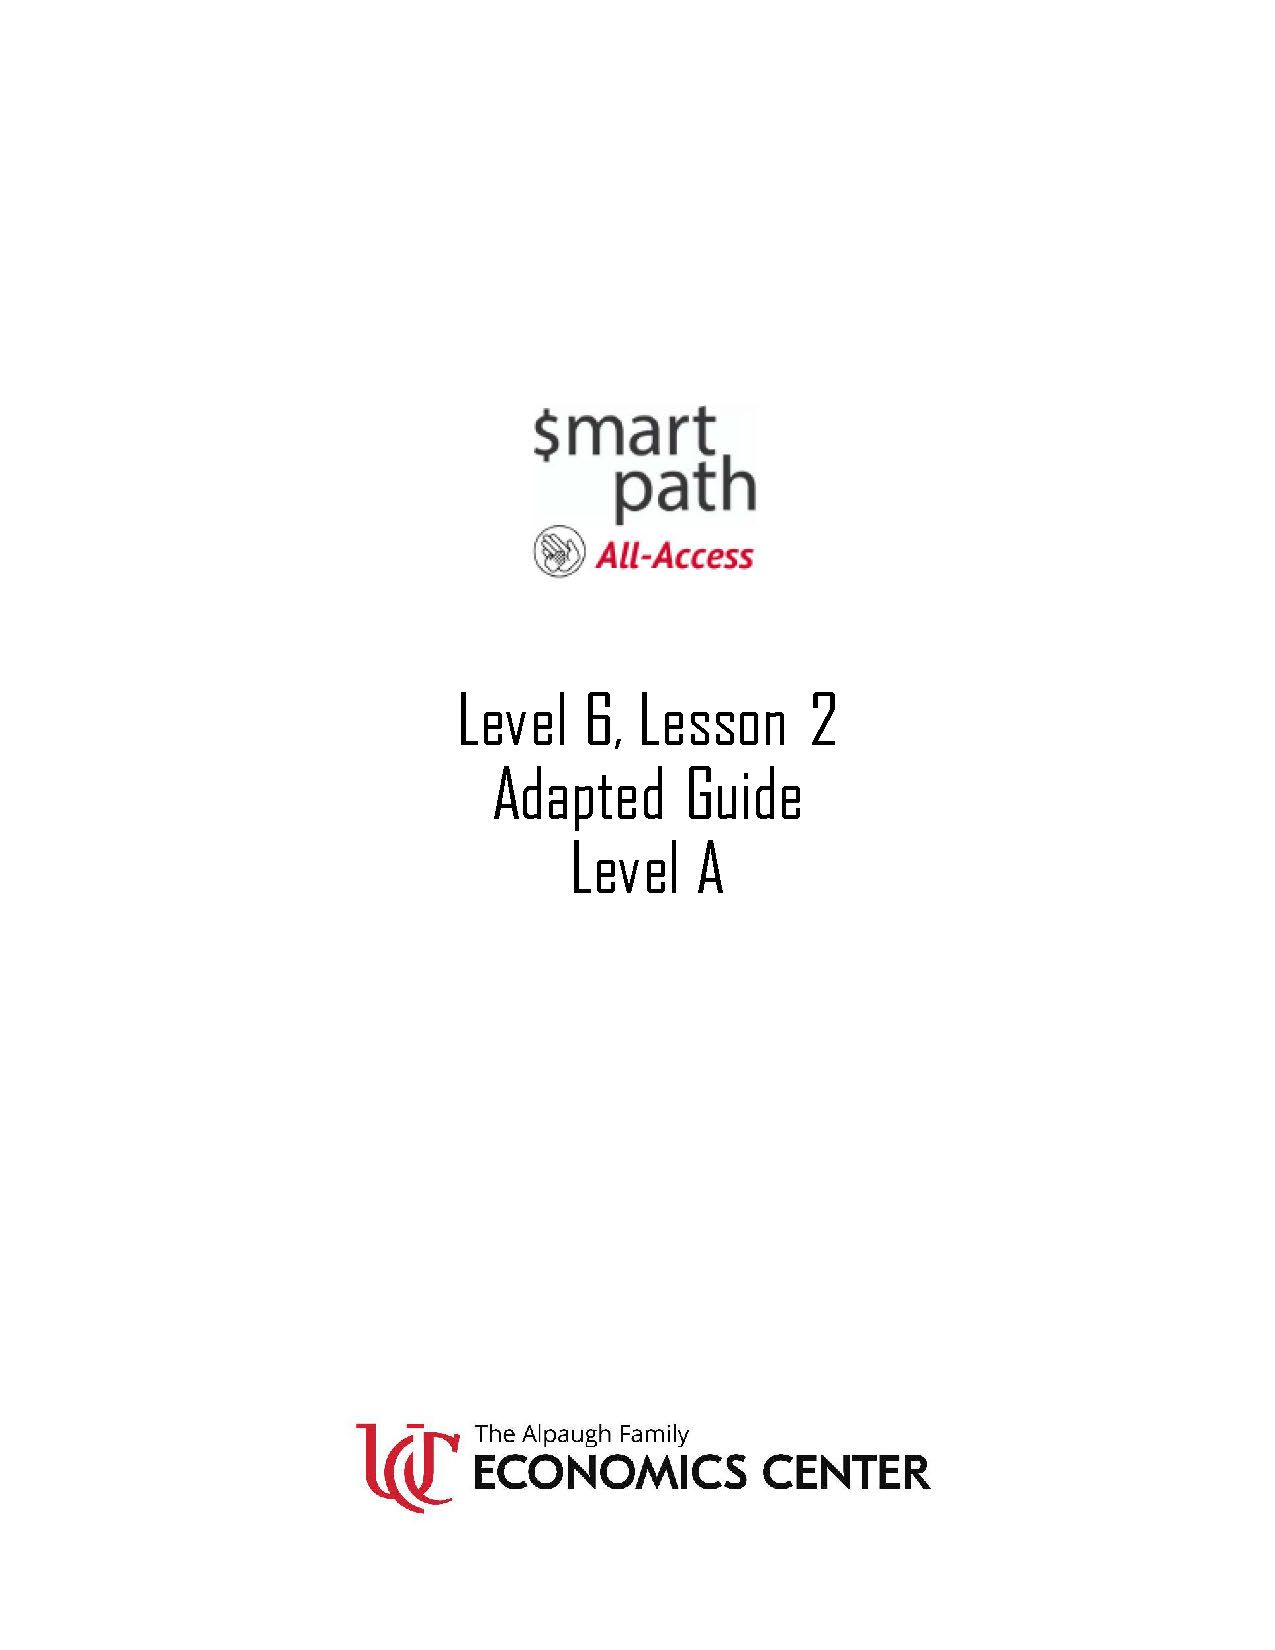 Level 6 Lesson 2 cover